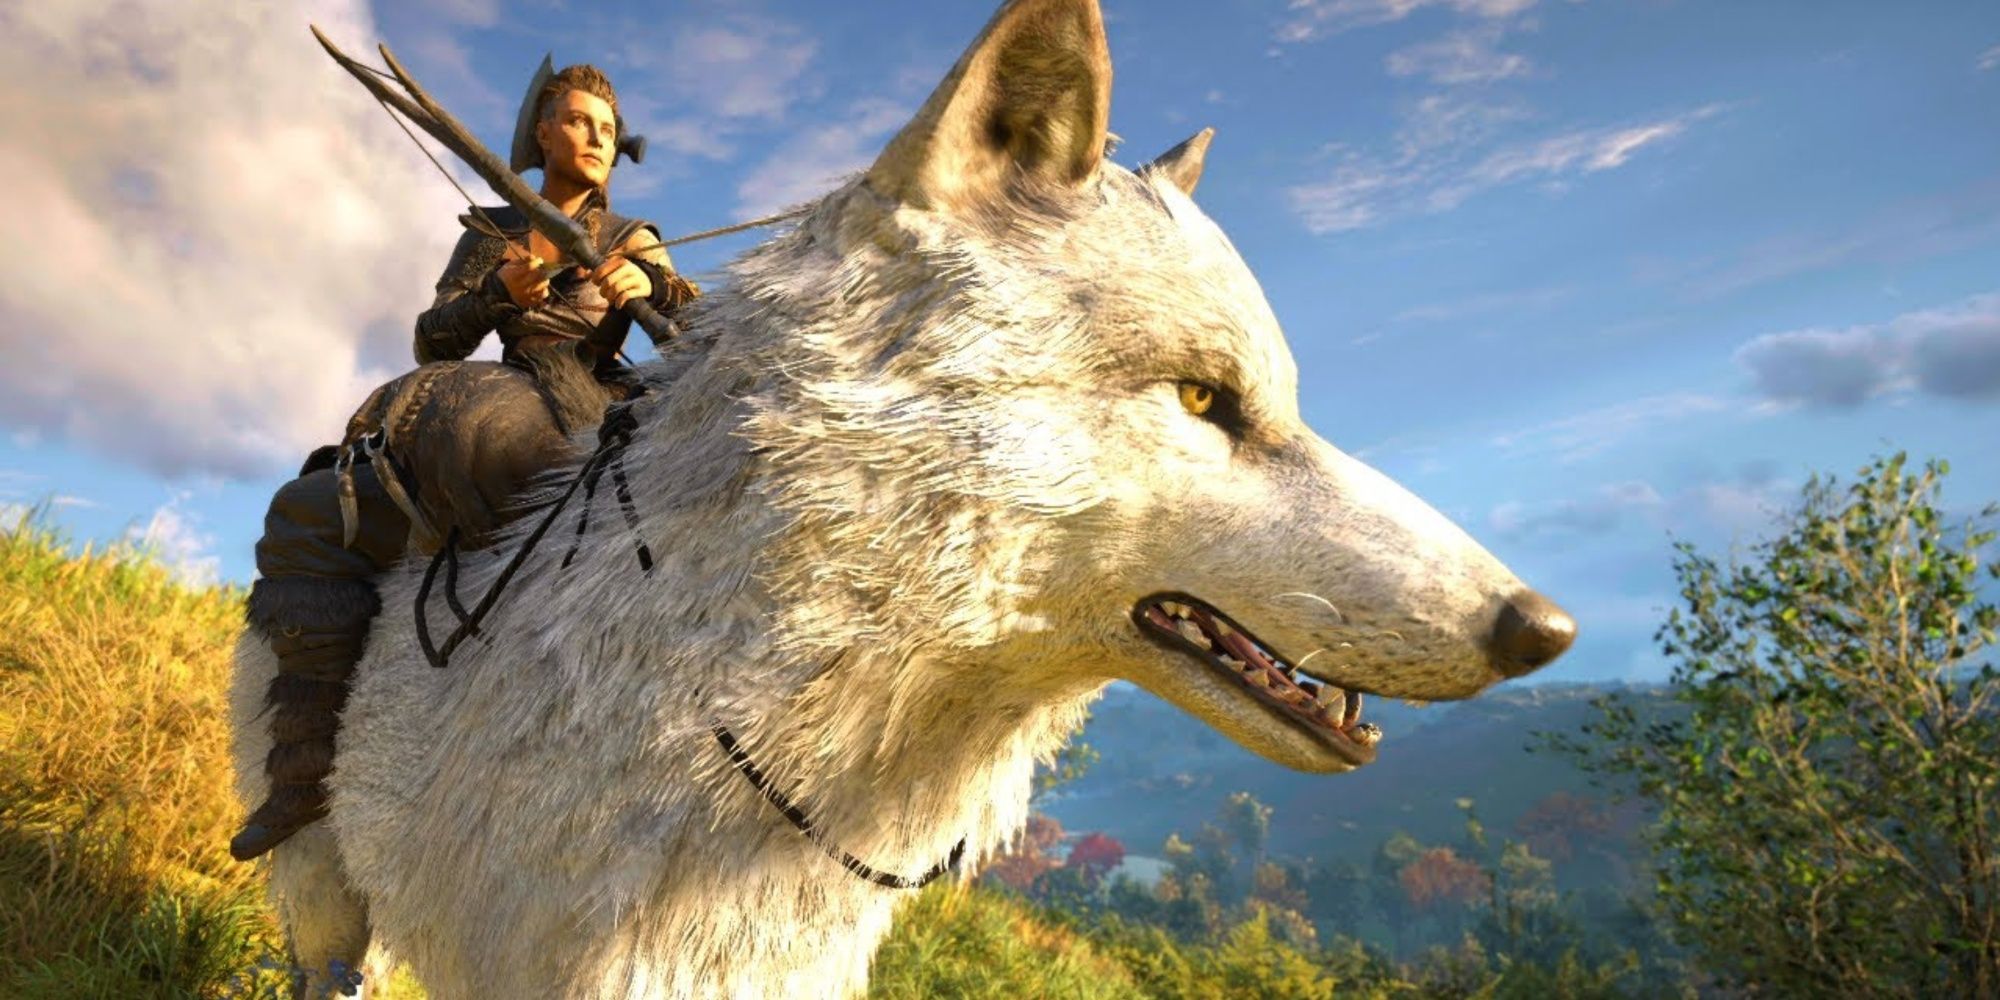 Lady Eivor Rides Her Loyal Fur Friend Assassin's Creed Valhalla